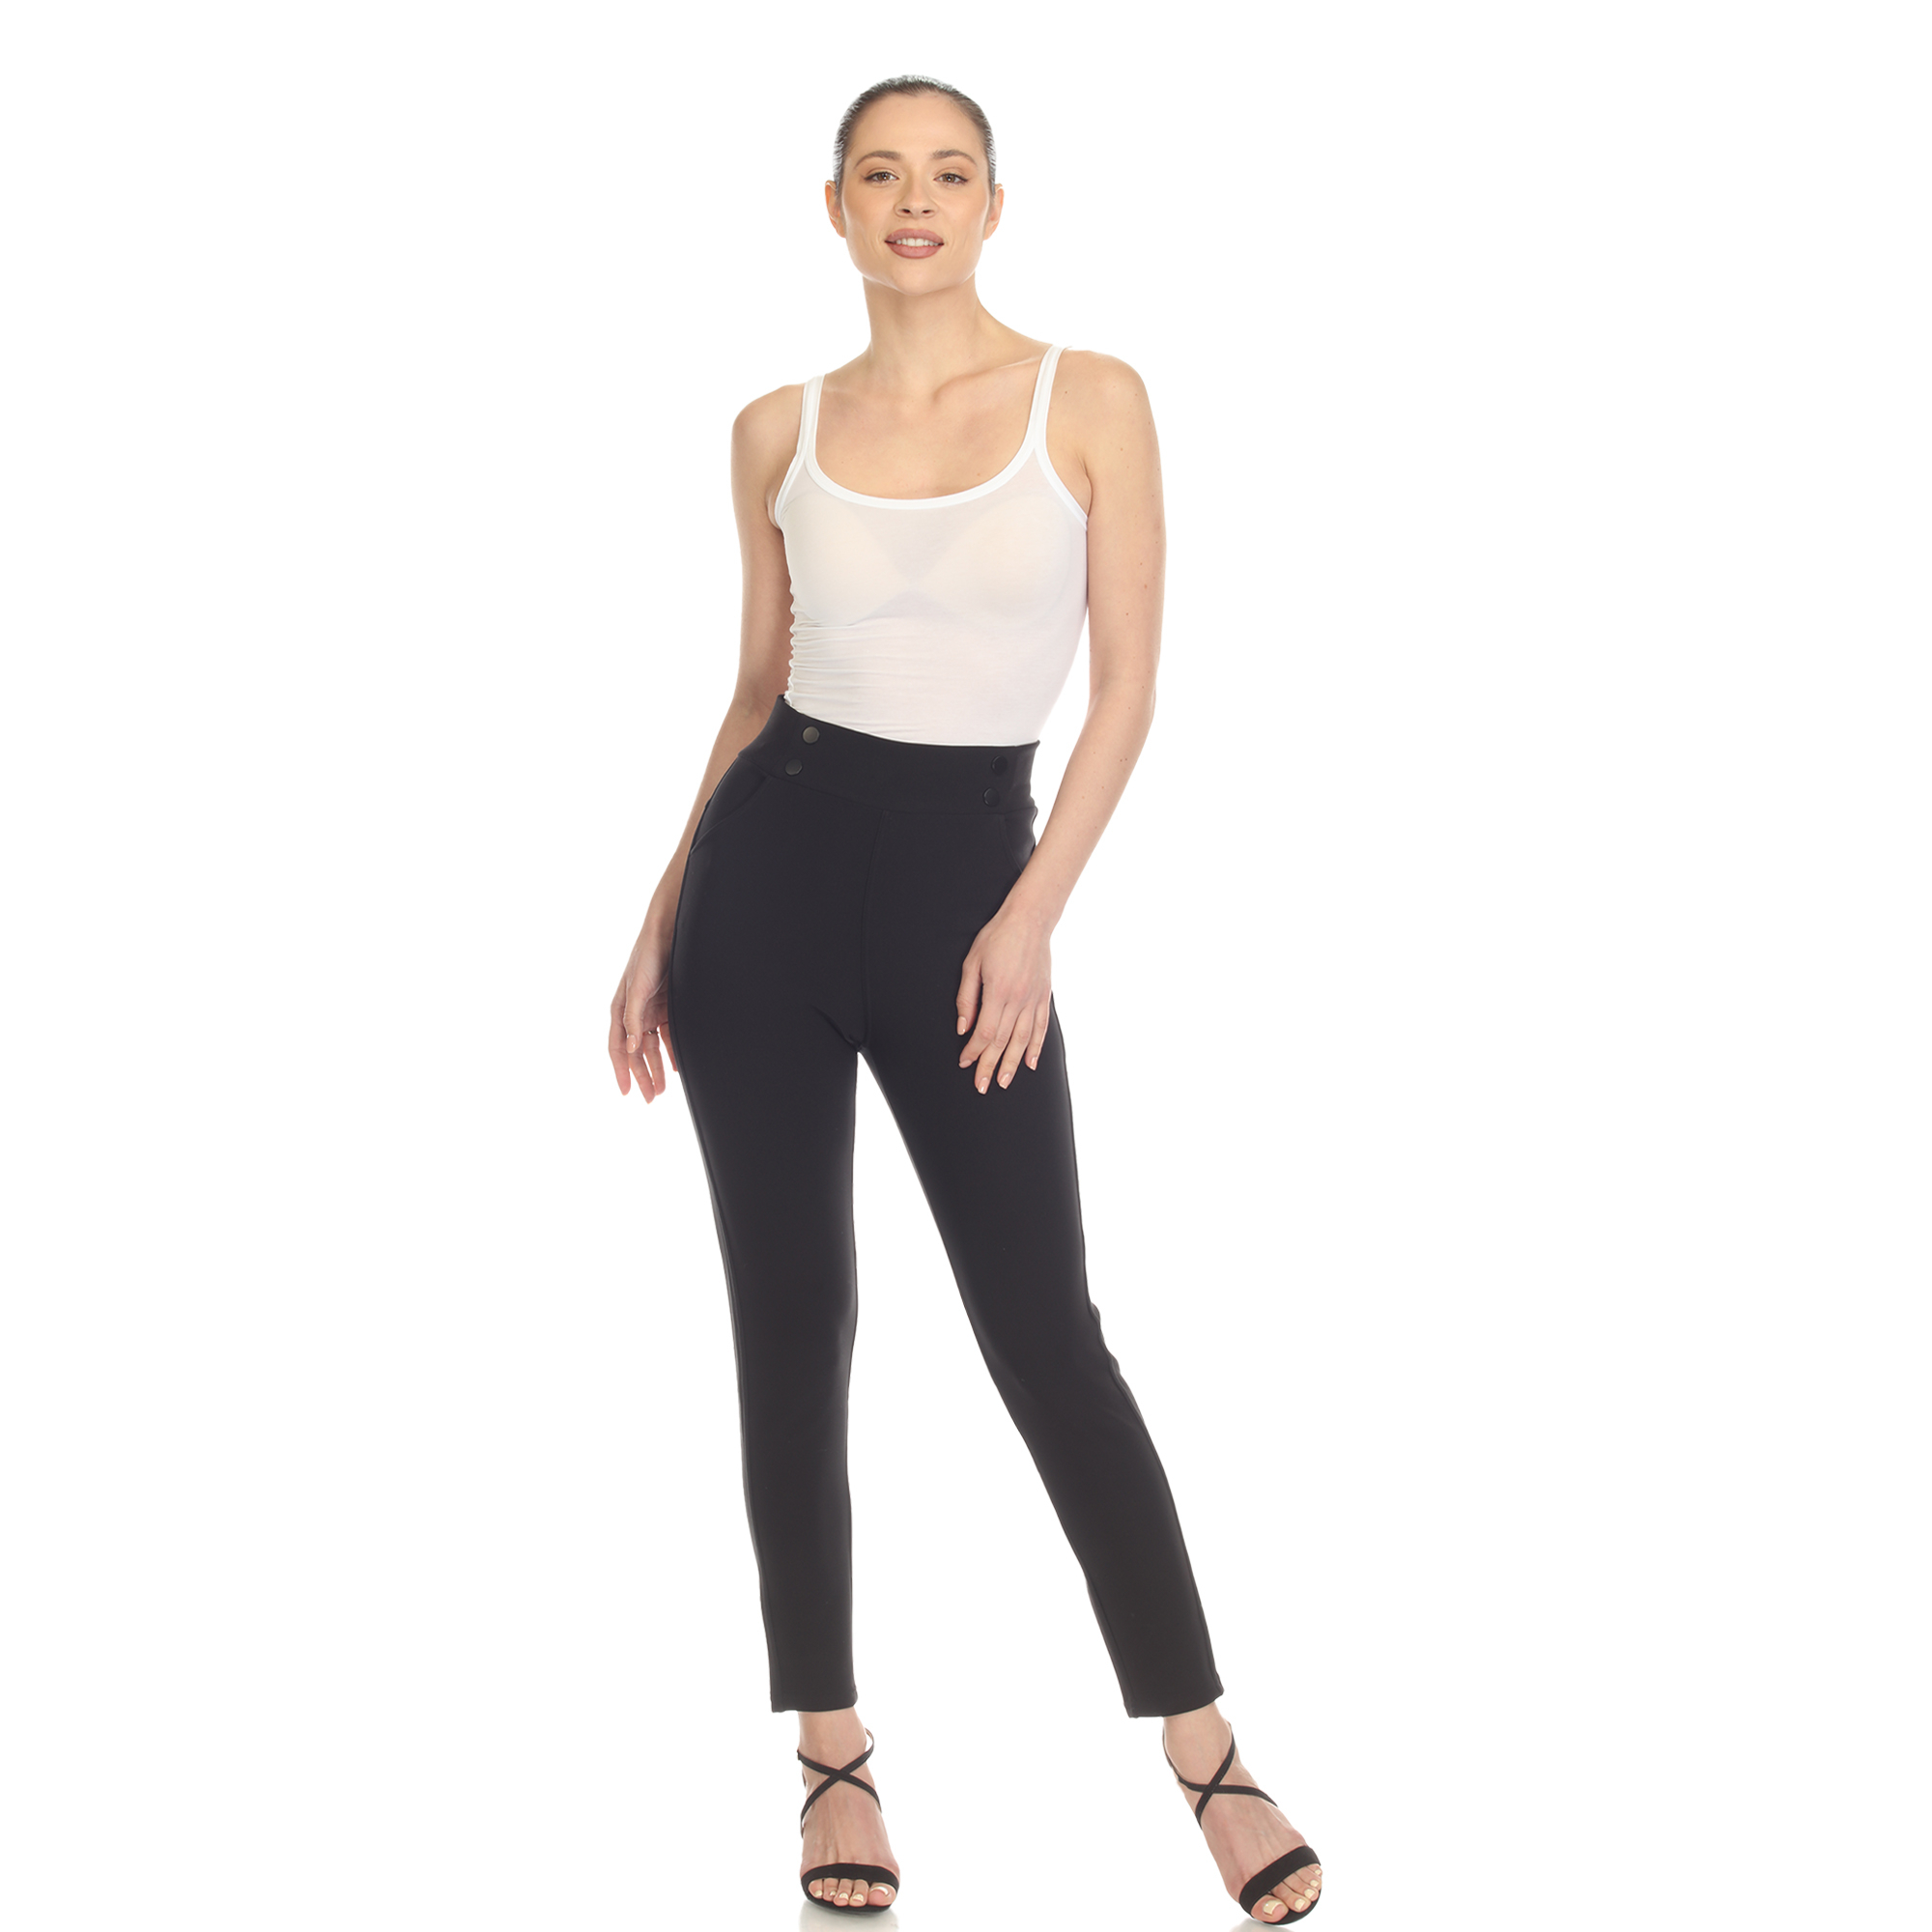 White Mark Women's Super Soft Elastic Waistband High Waist Scuba Pants With Pockets - Black, X-Large